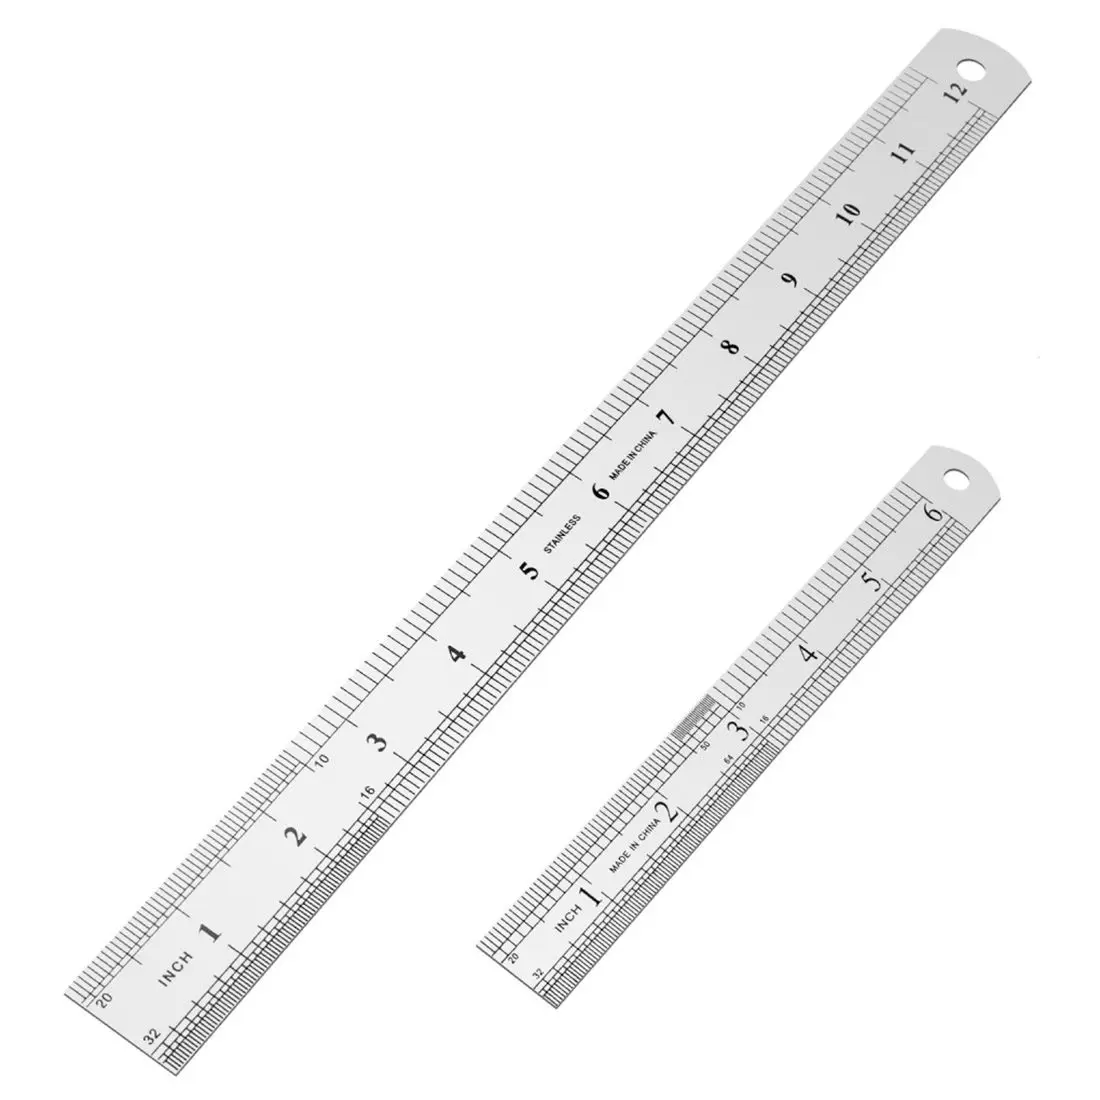 inch ruler